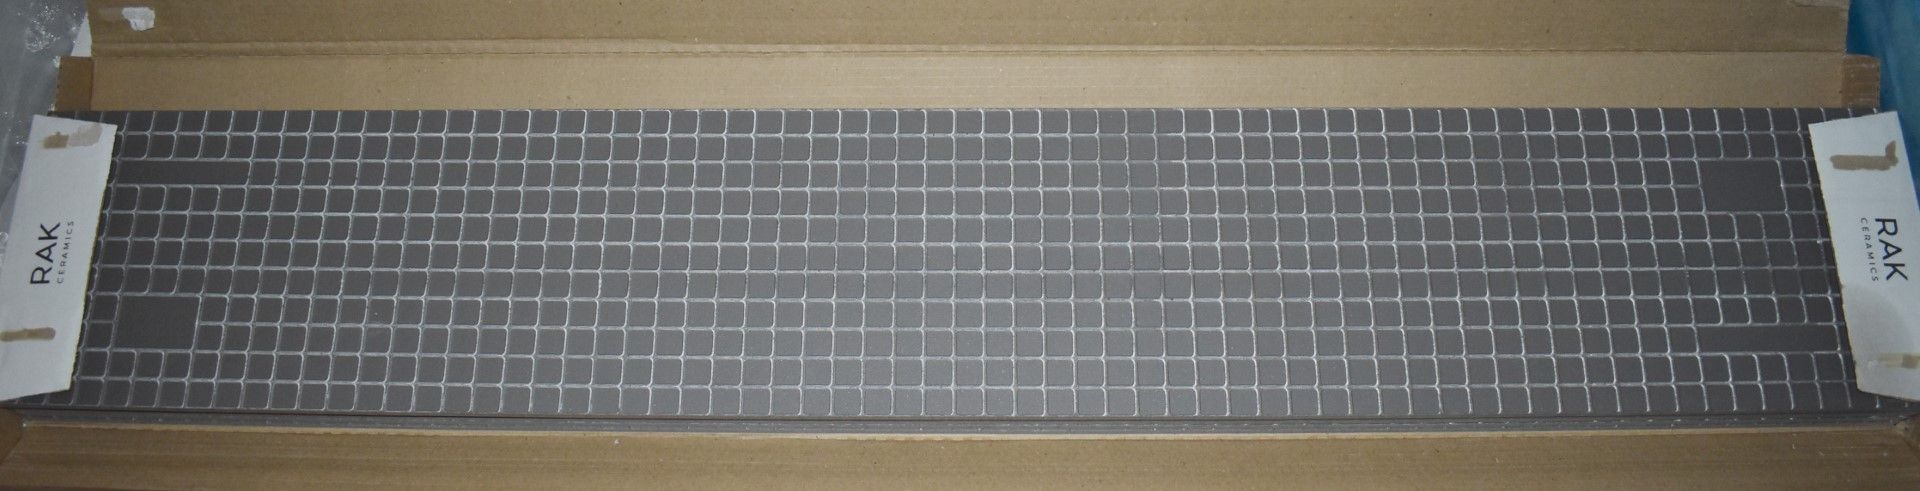 12 x Boxes of RAK Porcelain Floor or Wall Tiles - M Project Wood Design in Dark Grey - 19.5 x 120 cm - Image 8 of 8